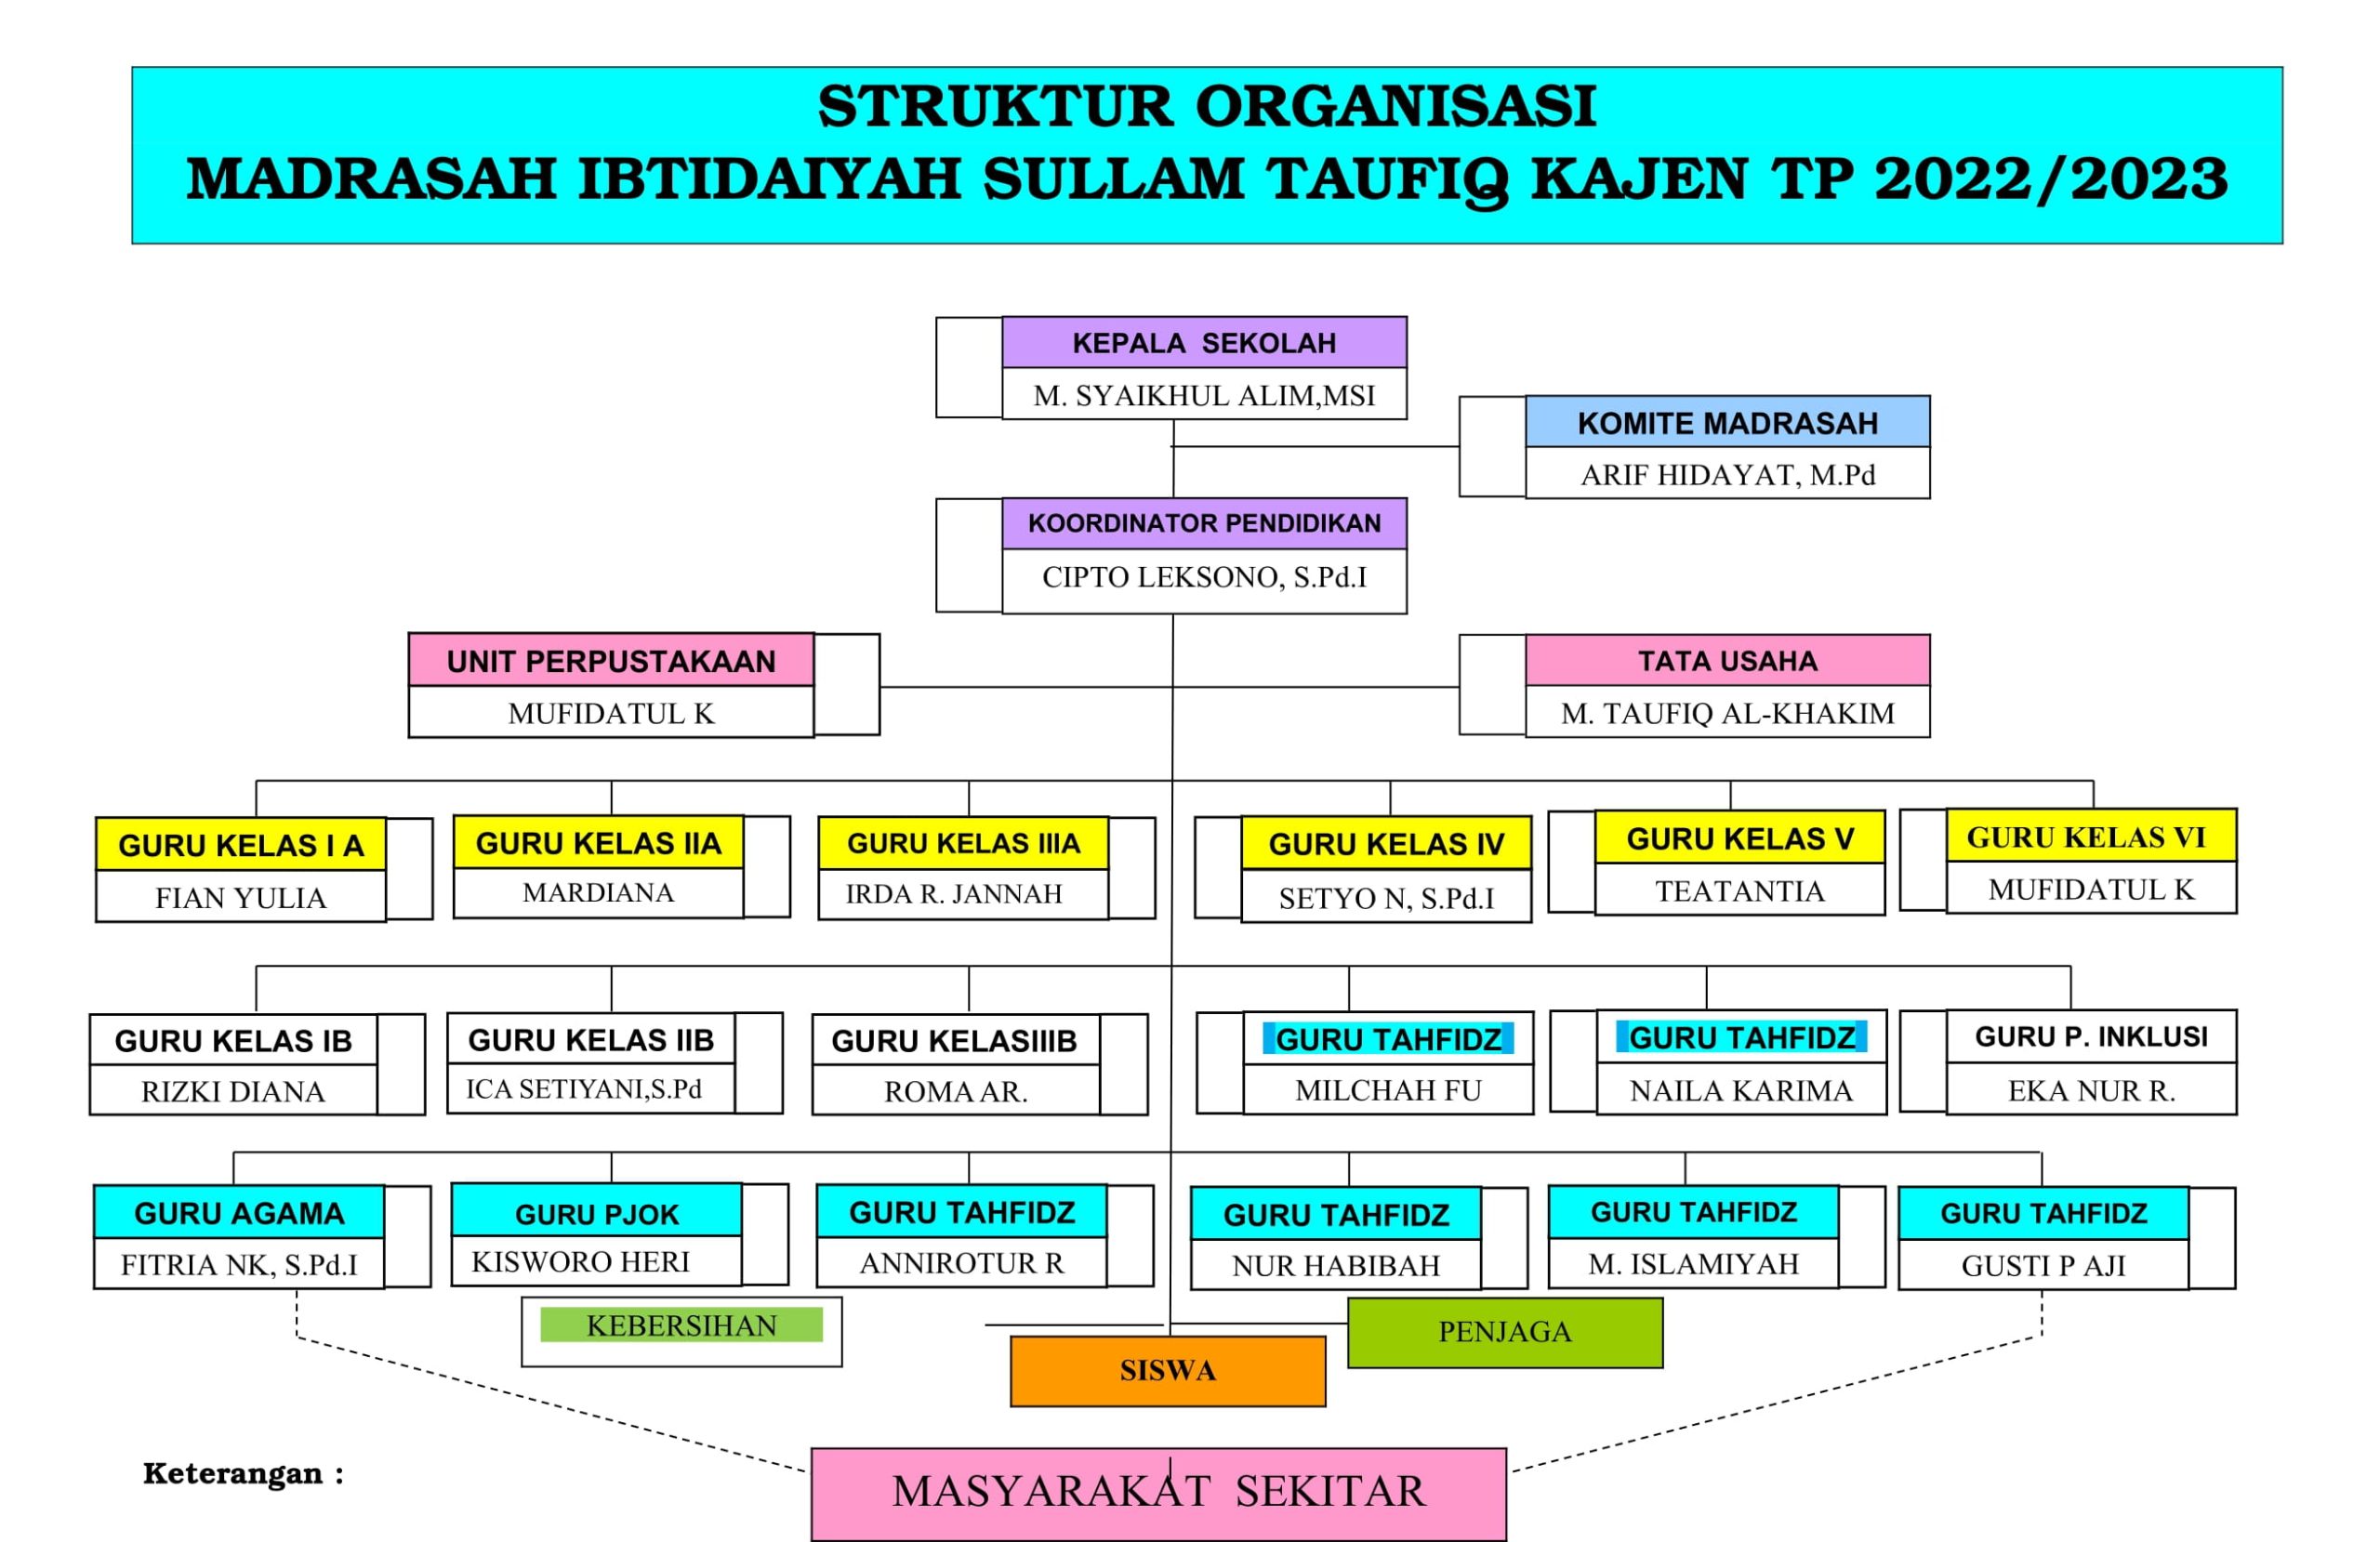 1.1 Bagan Struktur Organisasi MI Sulta-1